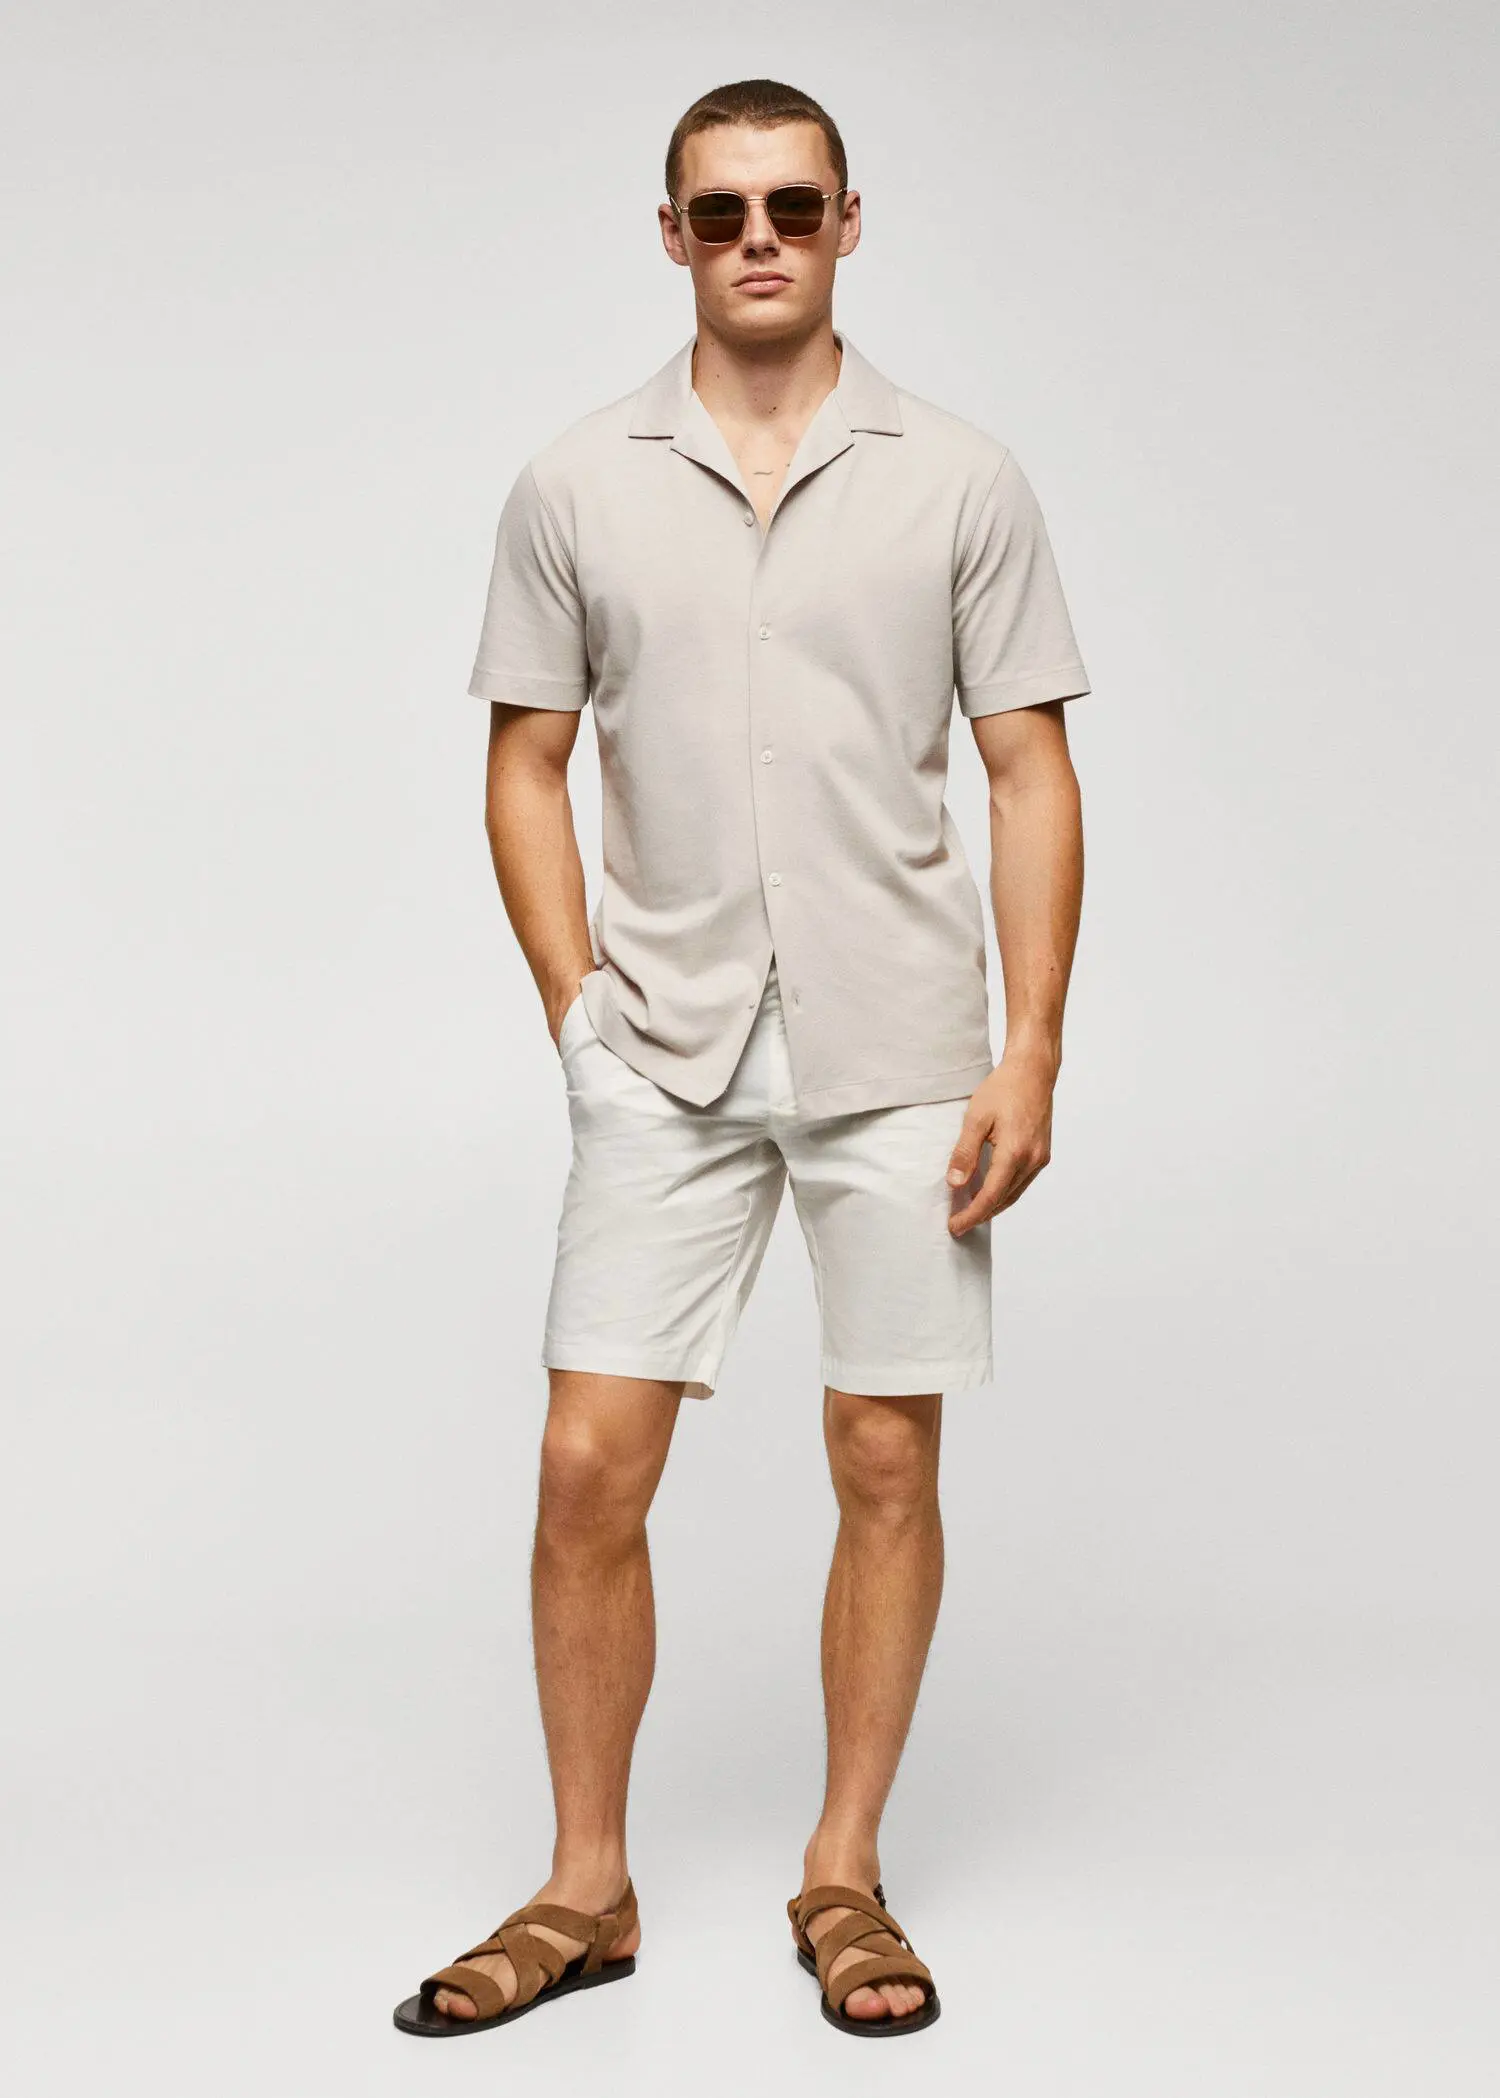 Mango Cotton pleated Bermuda shorts. a man in a tan shirt and shorts. 